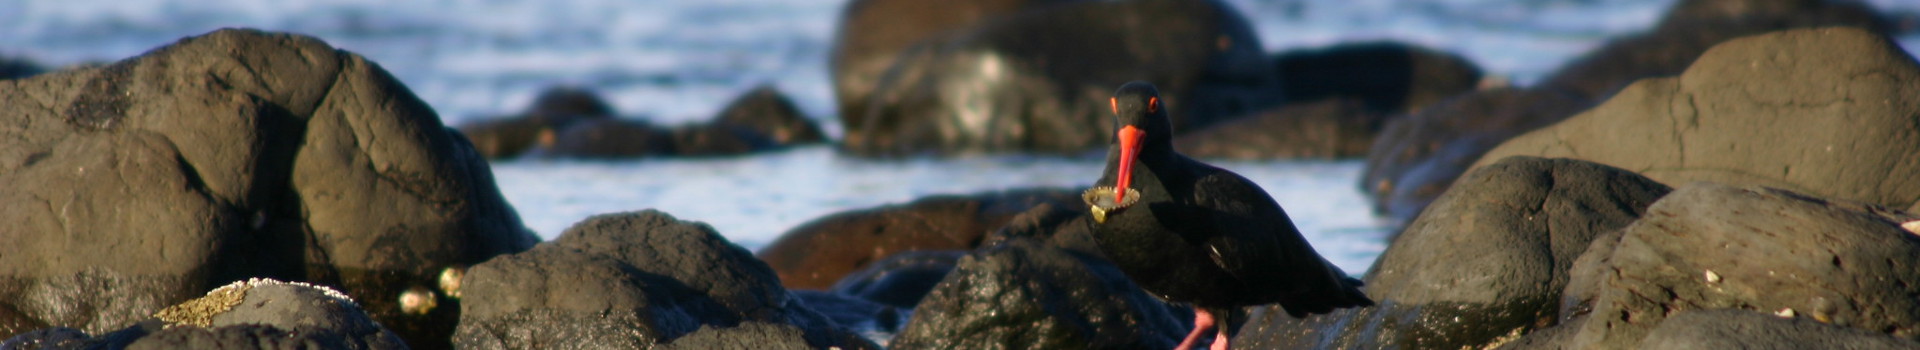 Sooty Oystercatcher sitting on rocks at beach